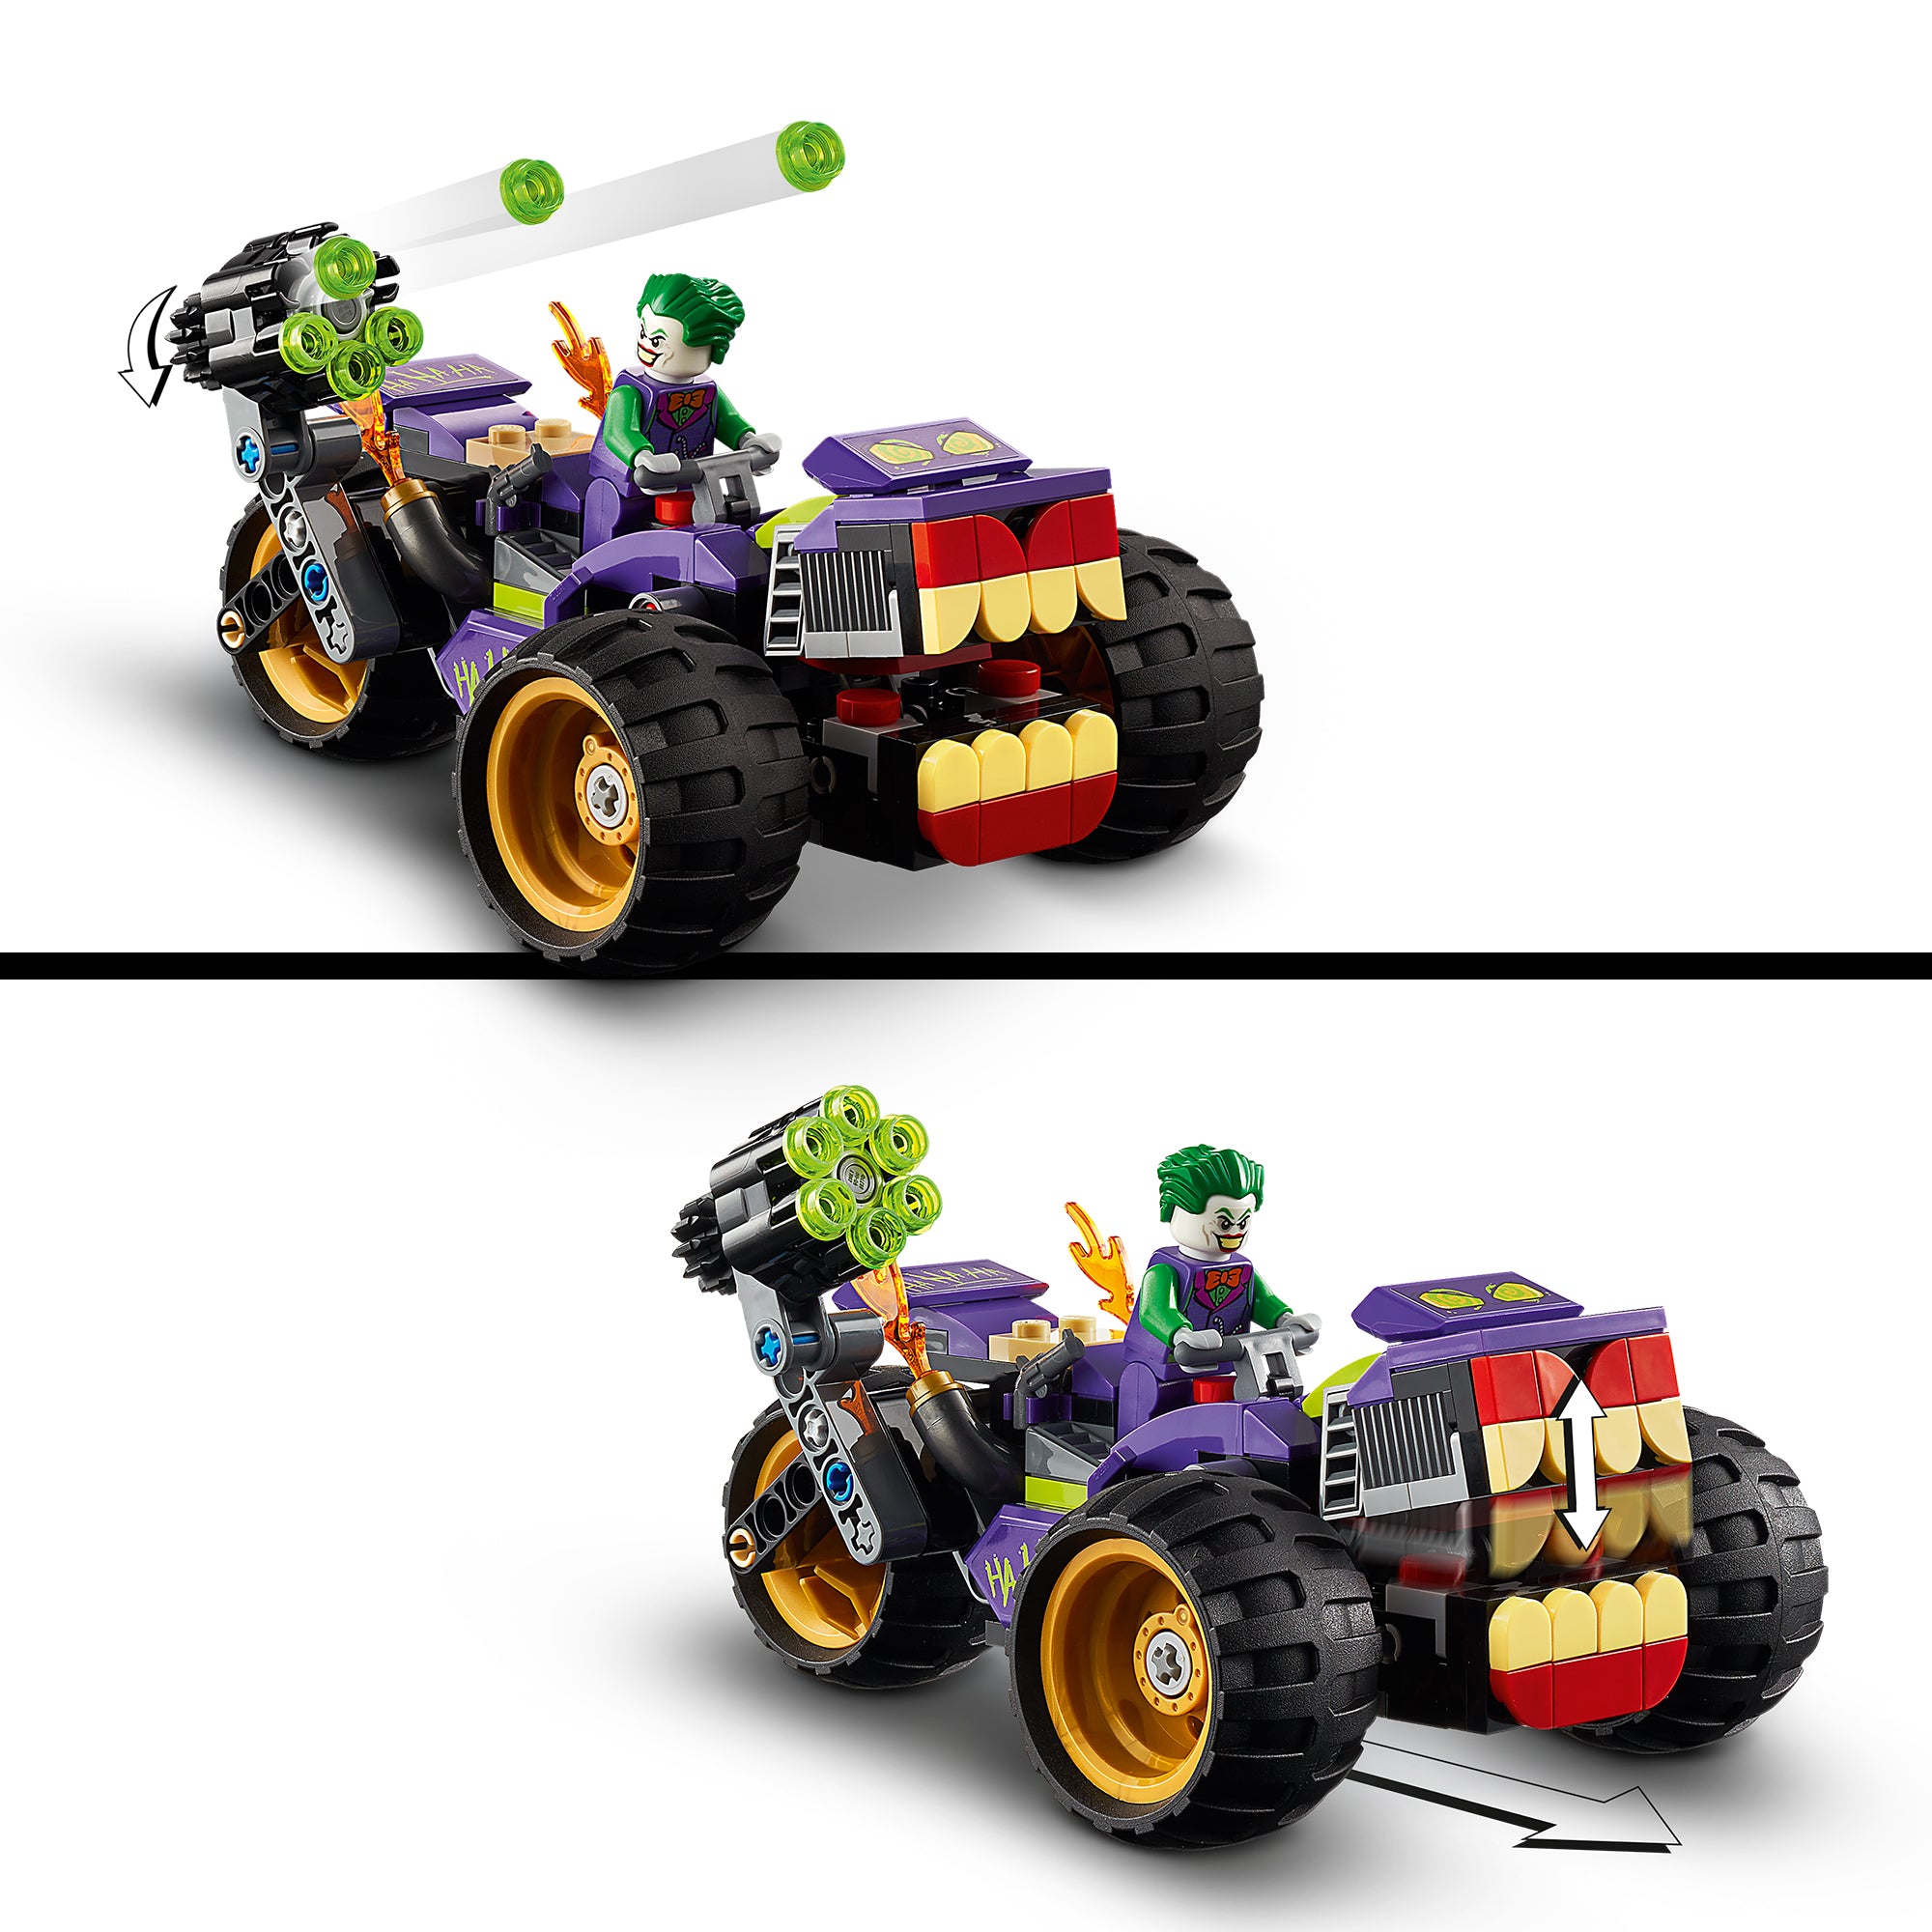 LEGO® DC Batman Joker's Trike Chase Toy 76159 Default Title